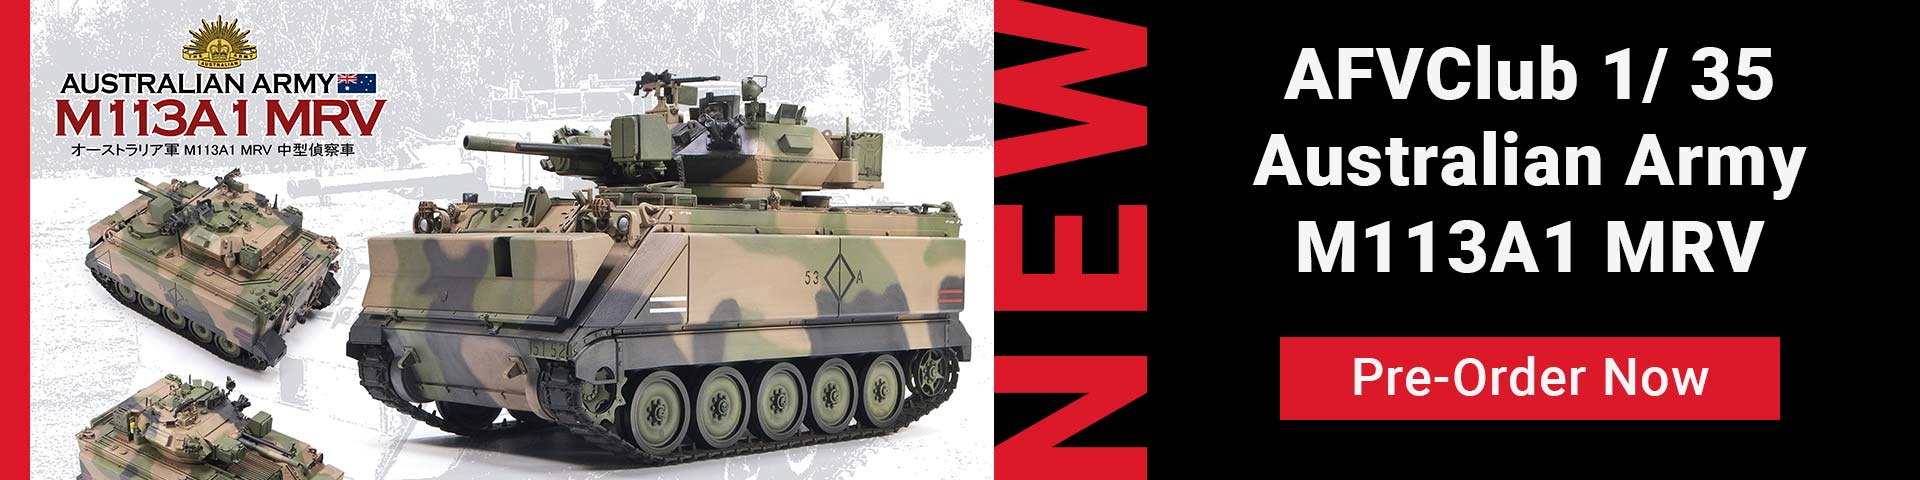 Preorder the new AFVClub 1/ 35 Australian Army M113A1 MRV